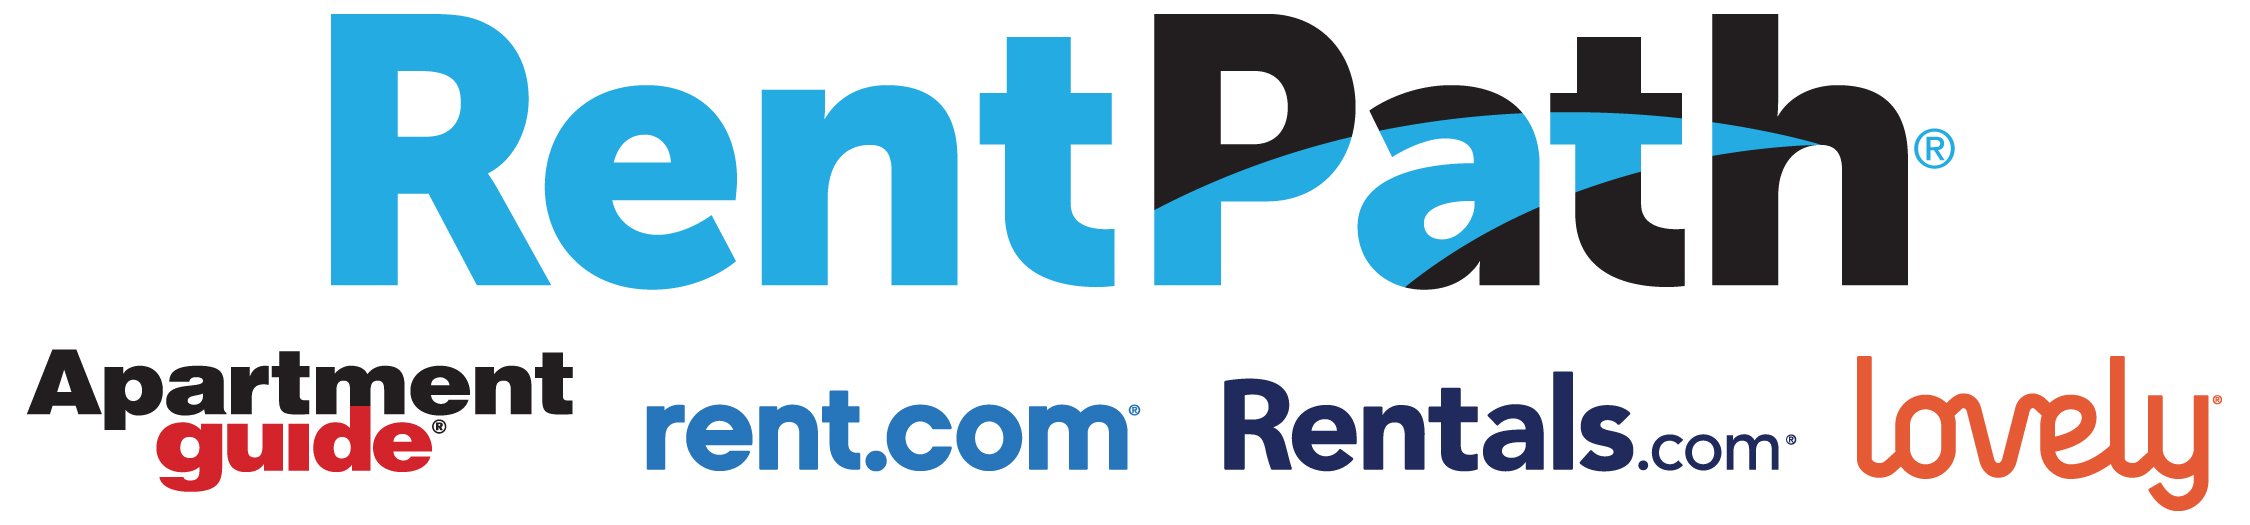 RentPath_AllBrands_Logo